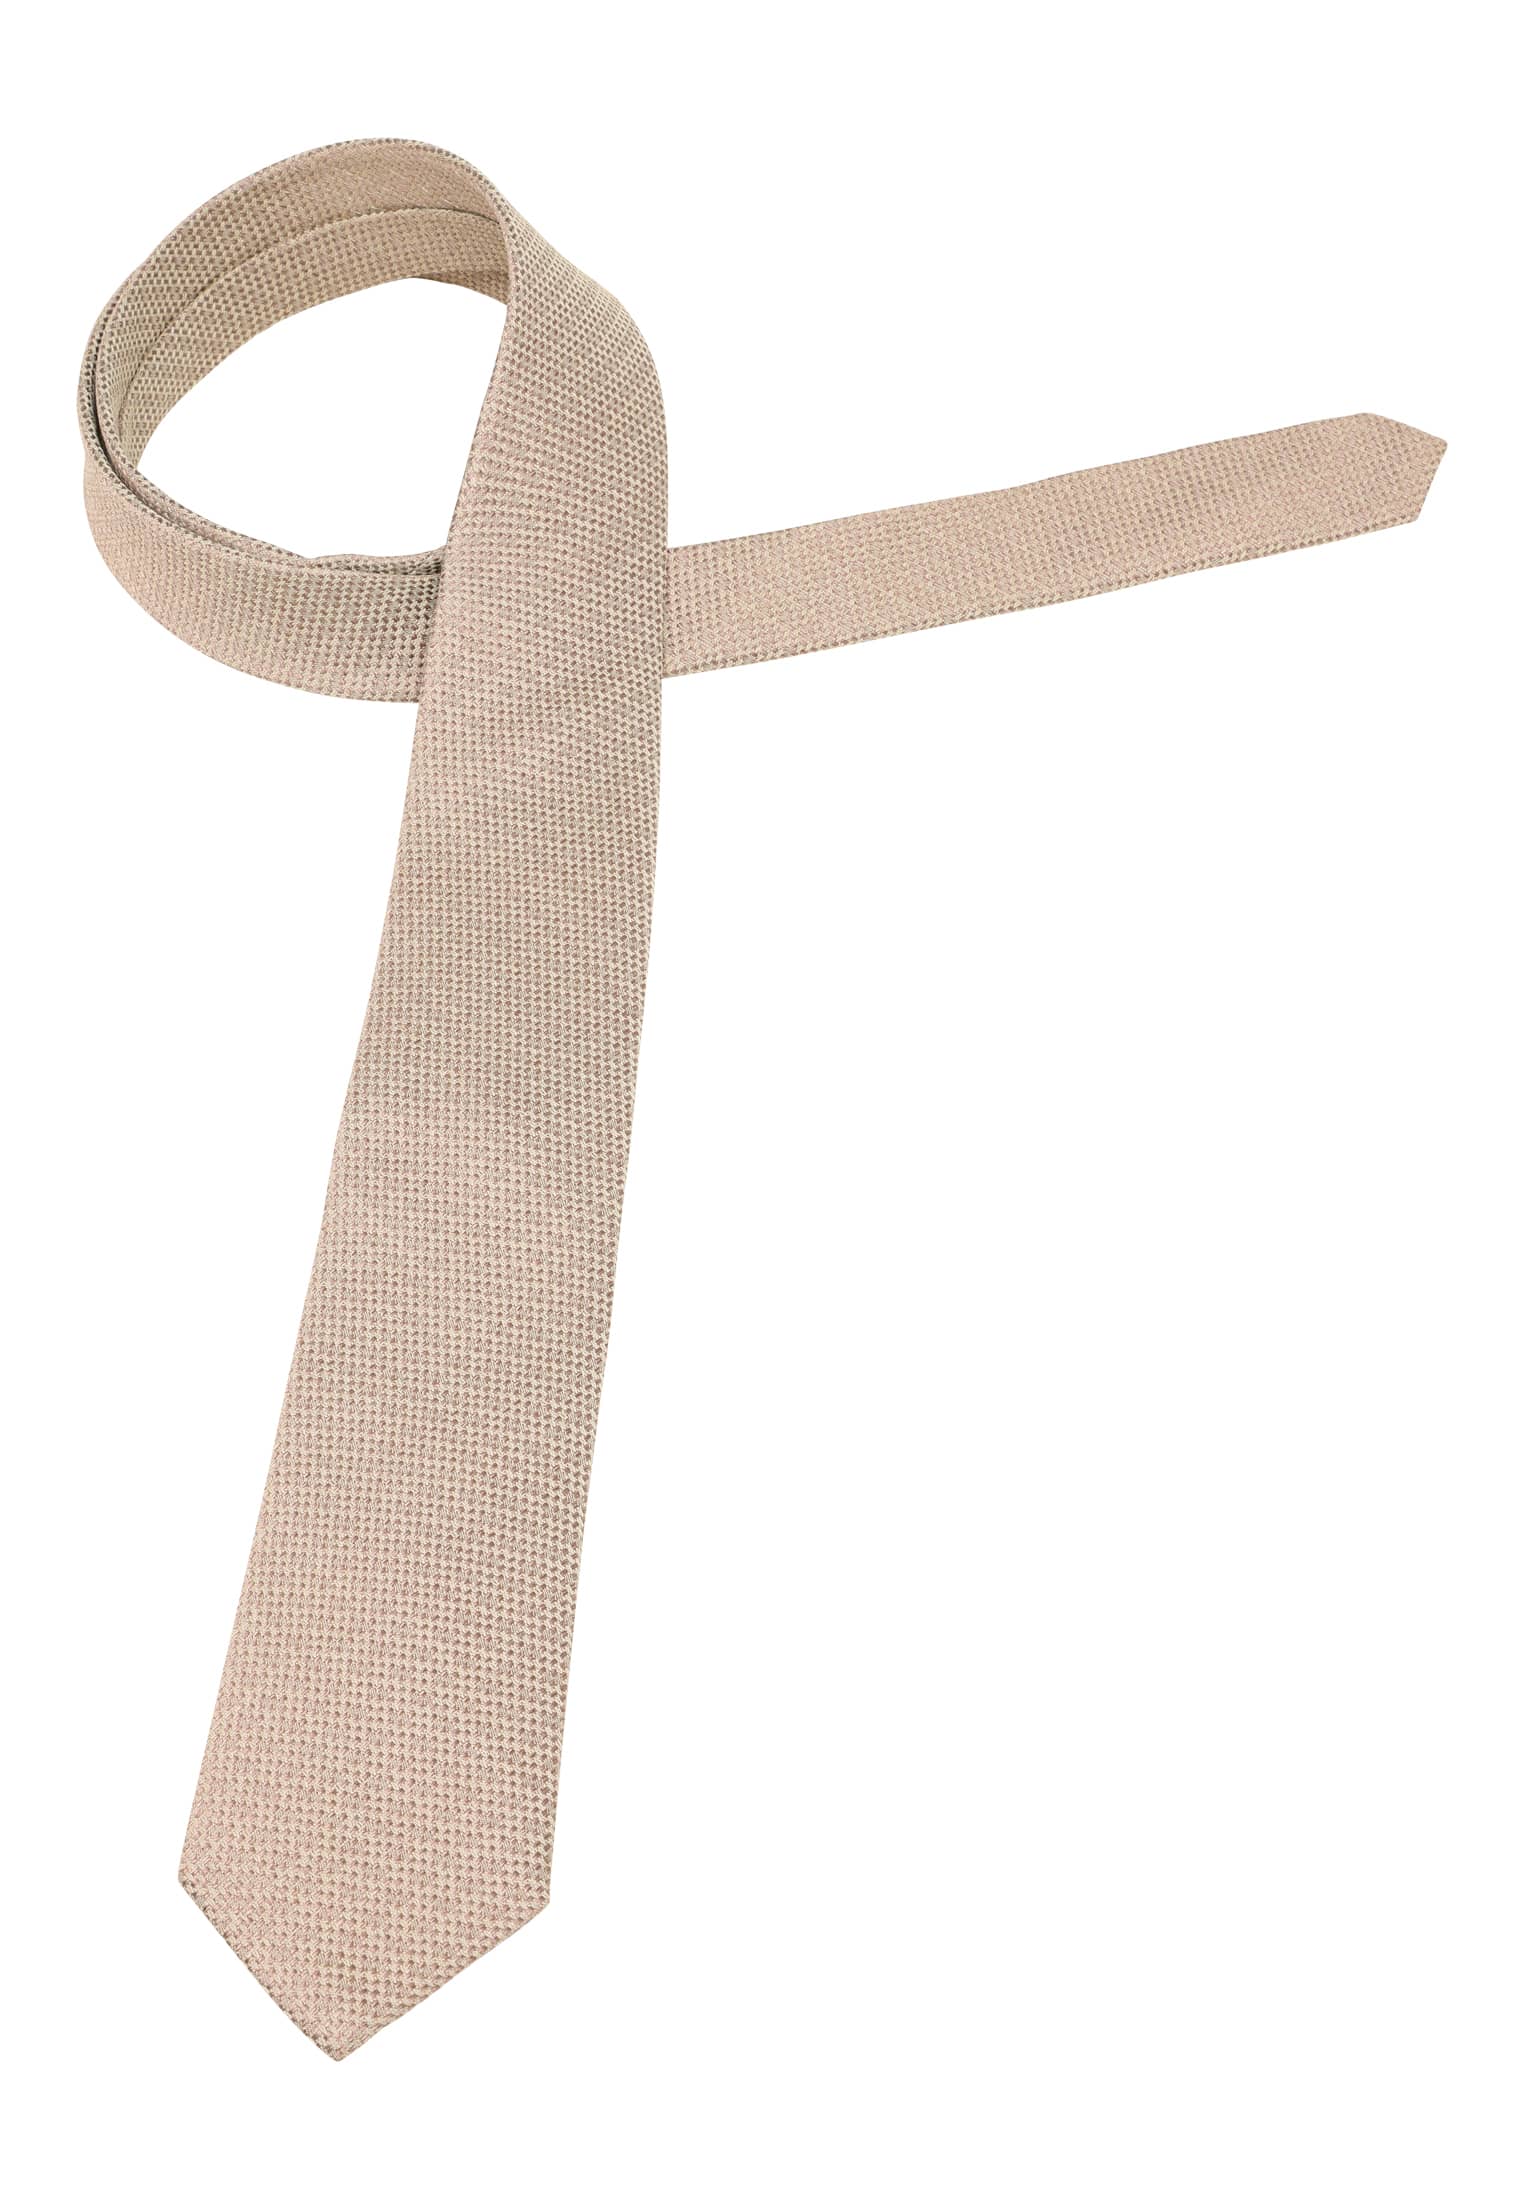 Krawatte in beige strukturiert | beige | 142 | 1AC02039-02-01-142 | Breite Krawatten